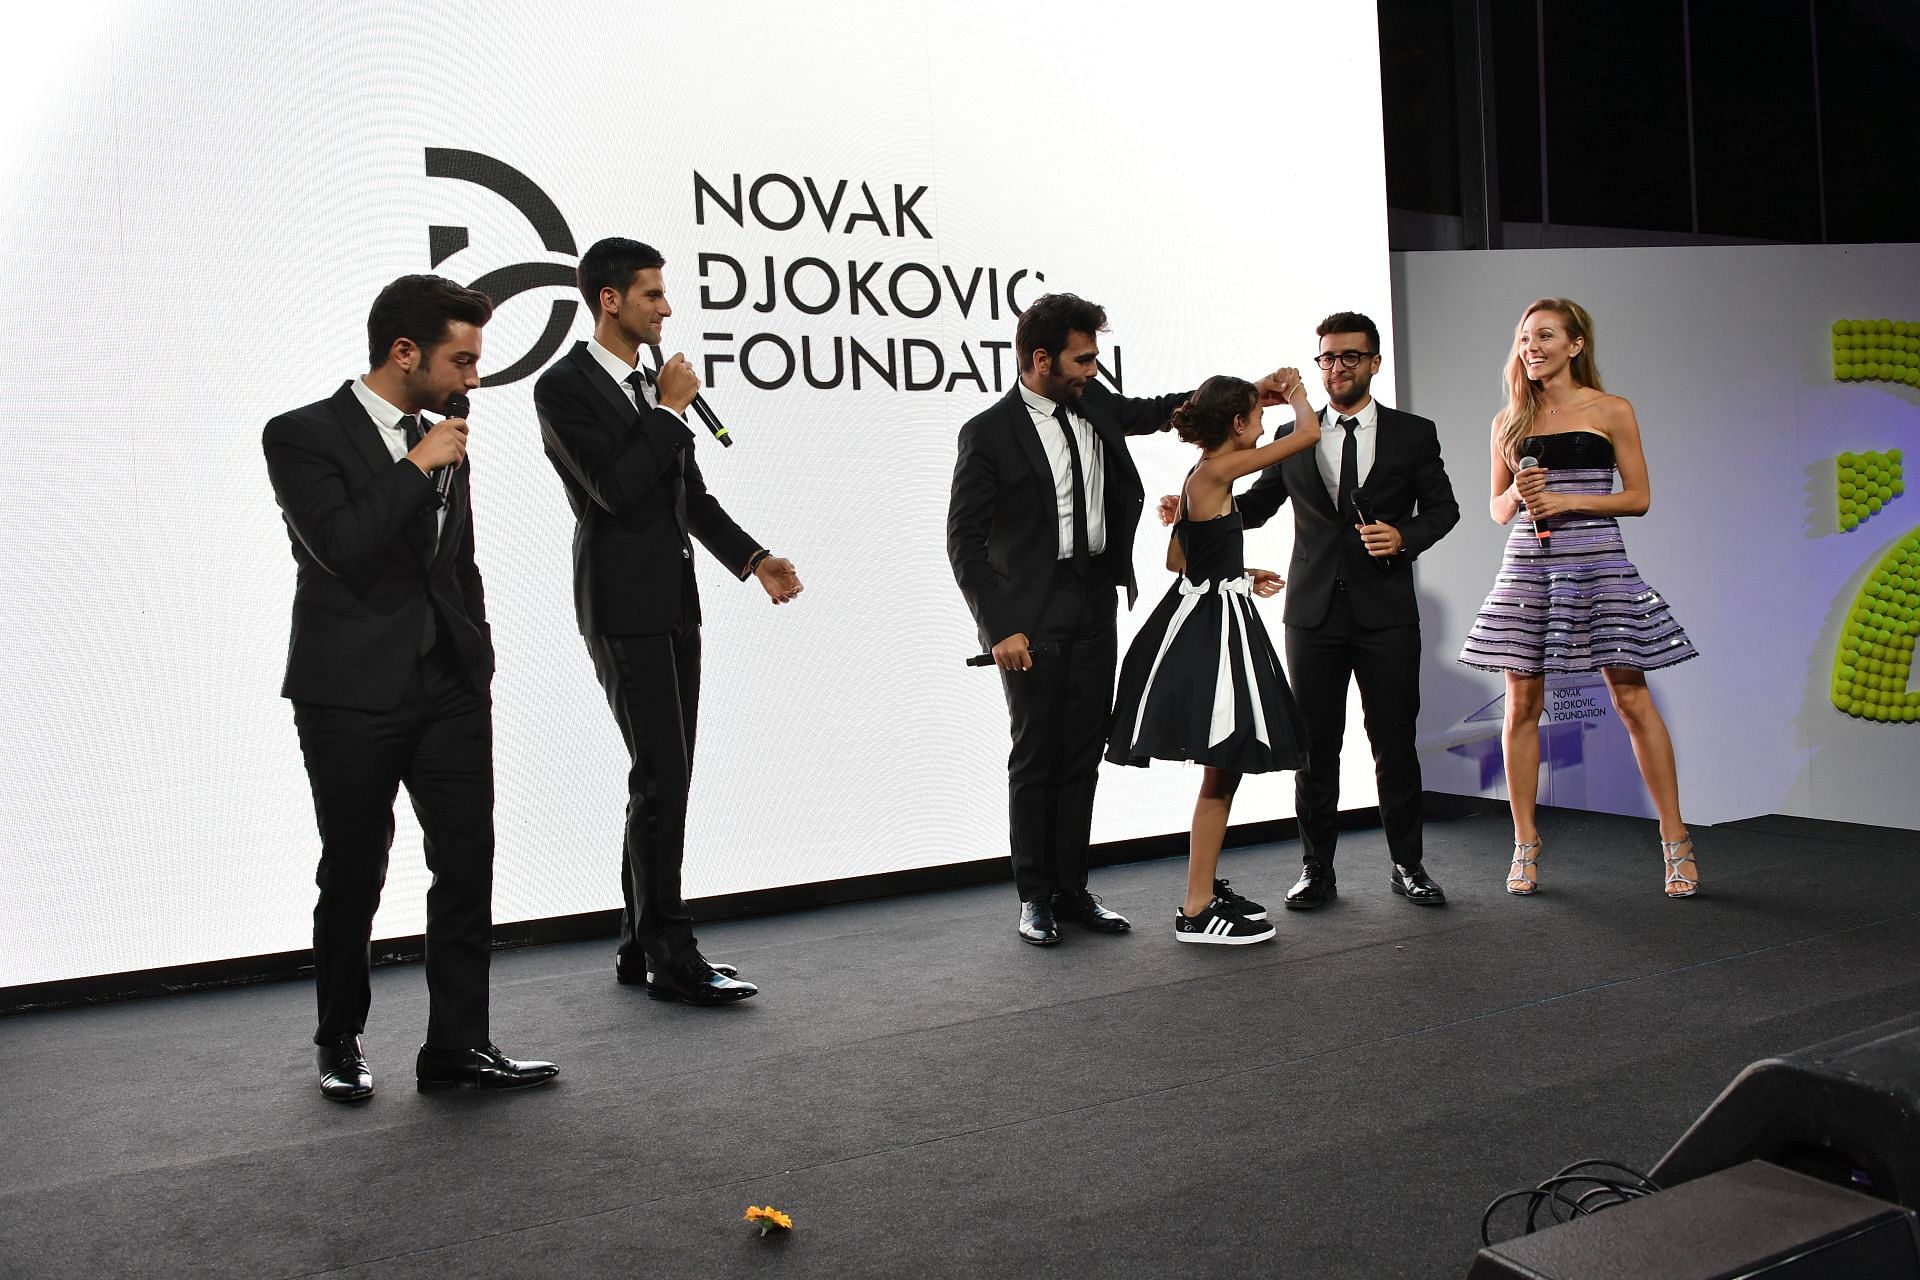 Novak Djokovic Foundation Aims To Cut The Waiting List By Providing